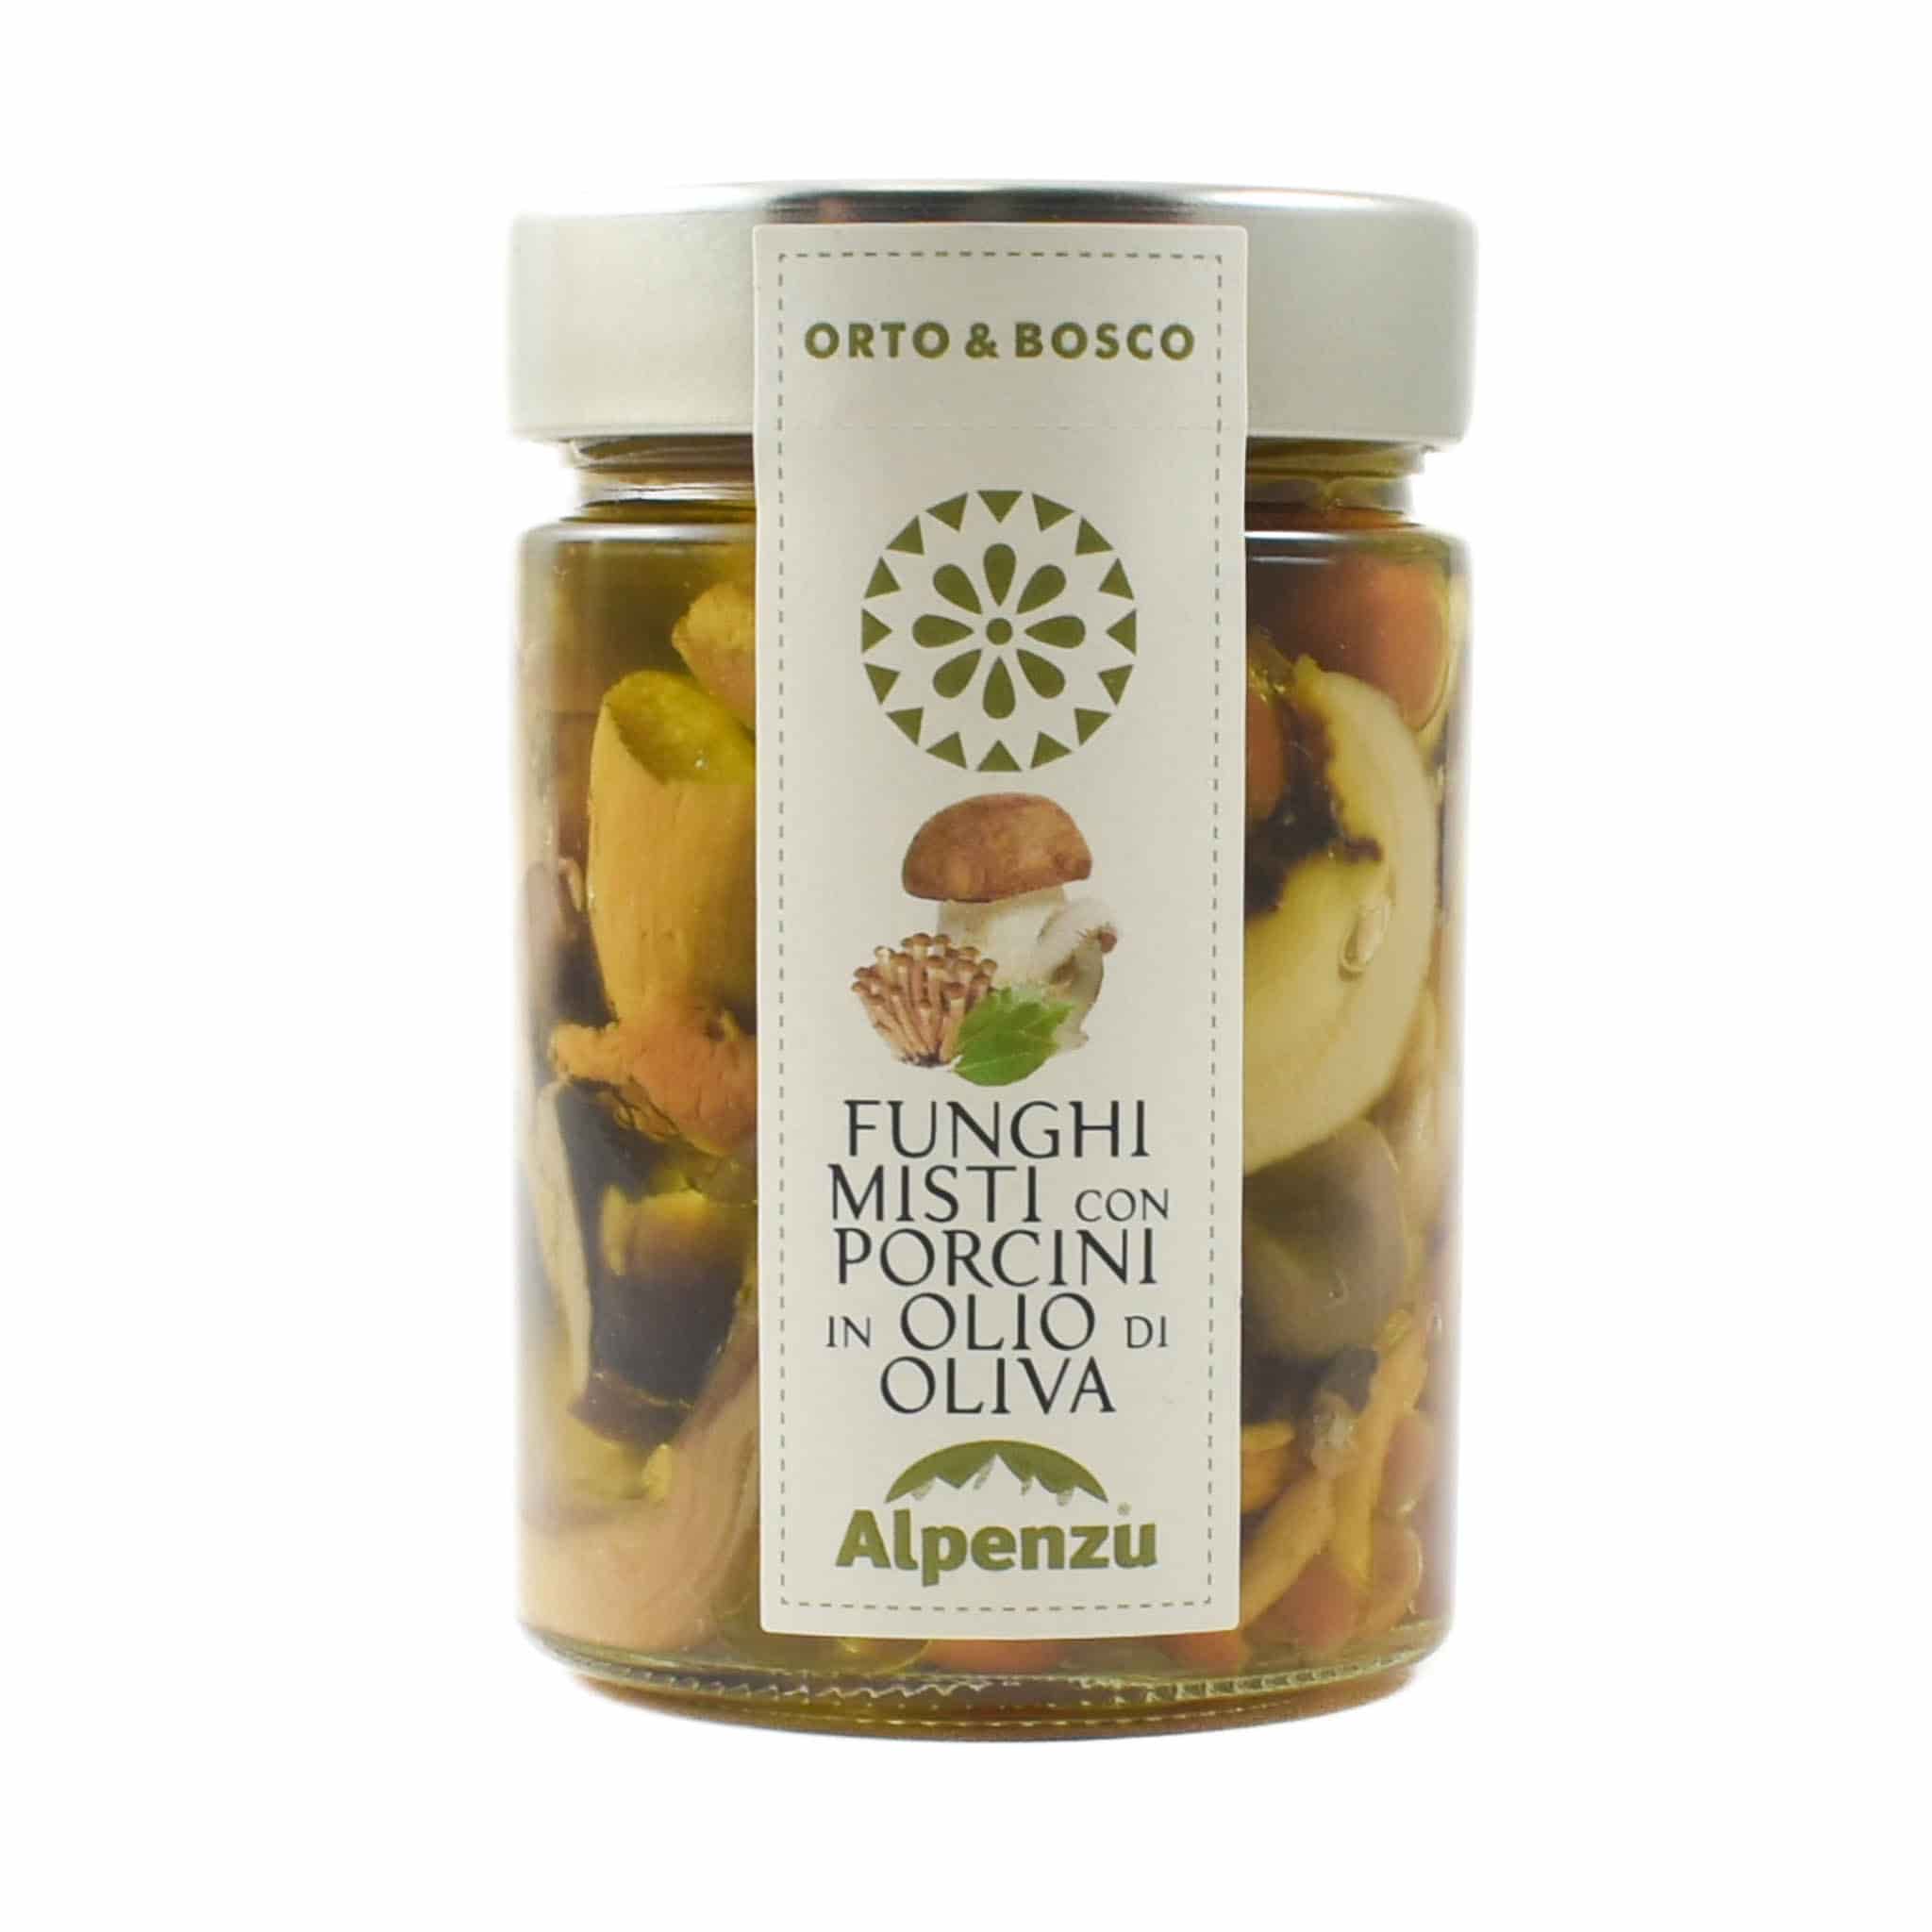 Alpenzu Mixed Mushrooms with Porcini Mushrooms in Olive Oil, 310g